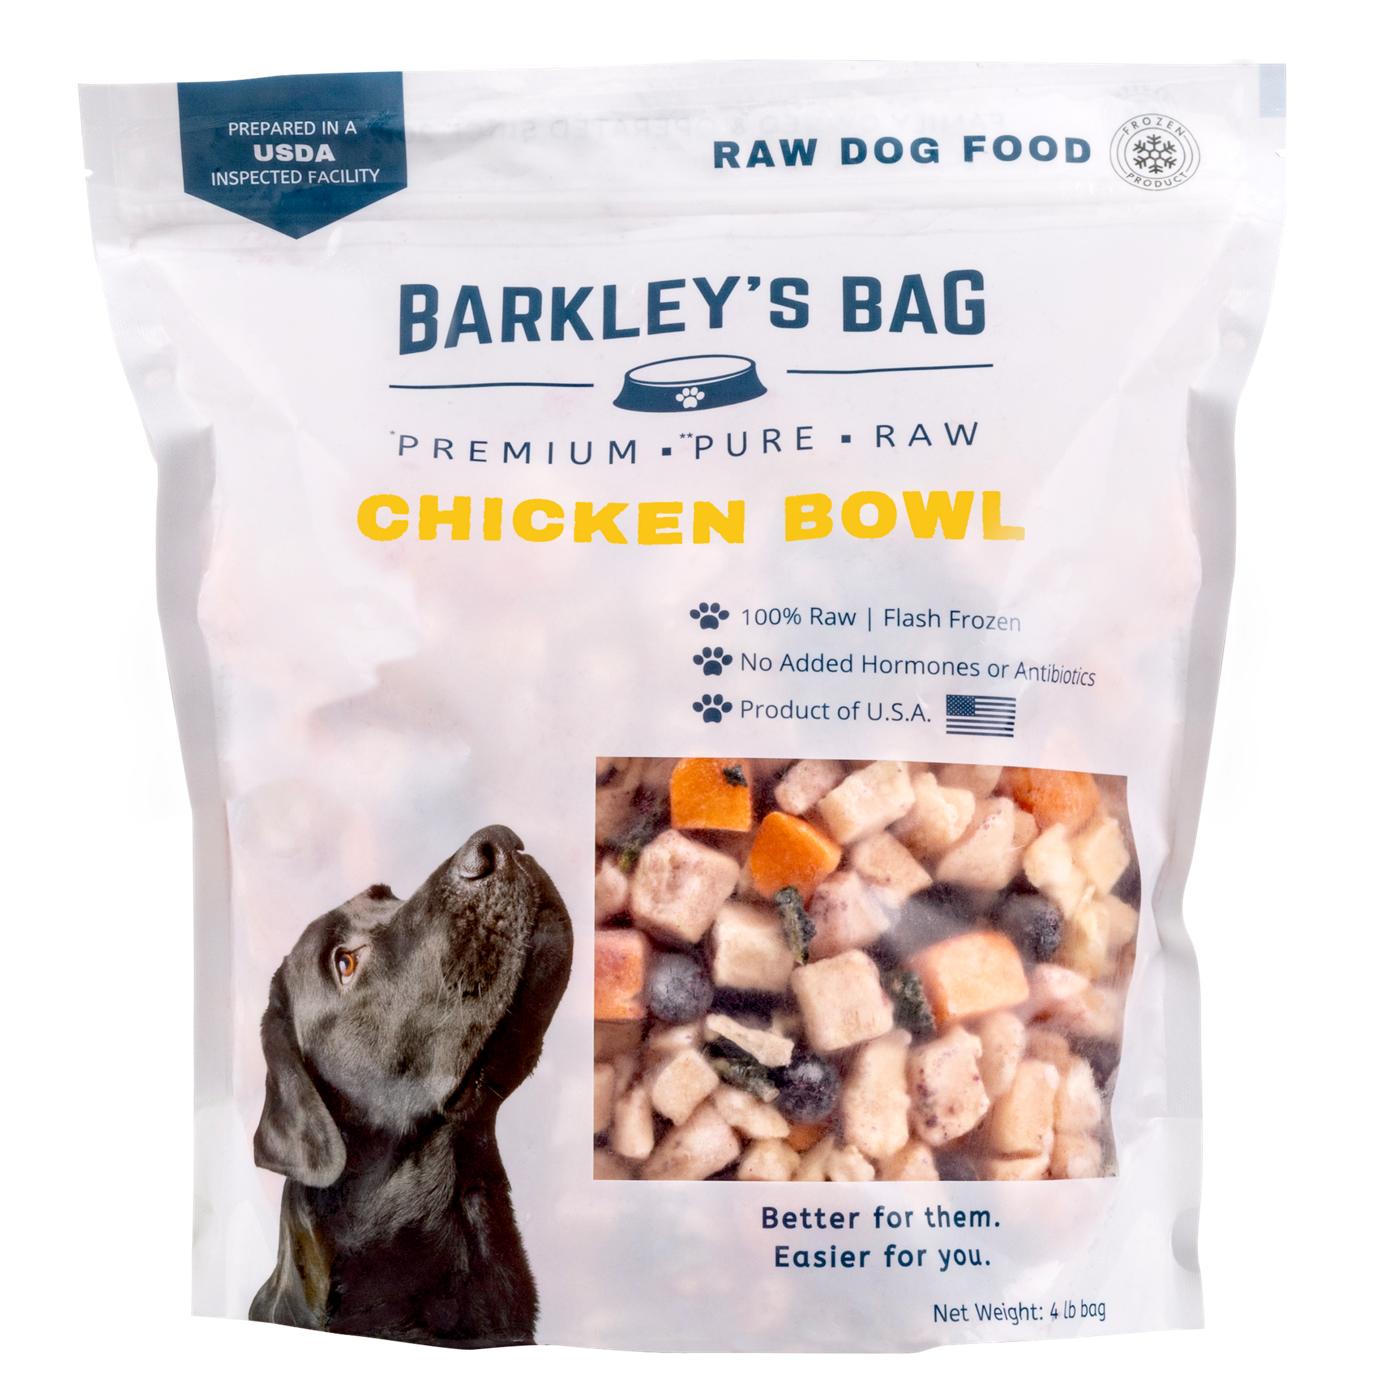 Barkley's Bag Chicken Bowl Raw Dog Food; image 1 of 2